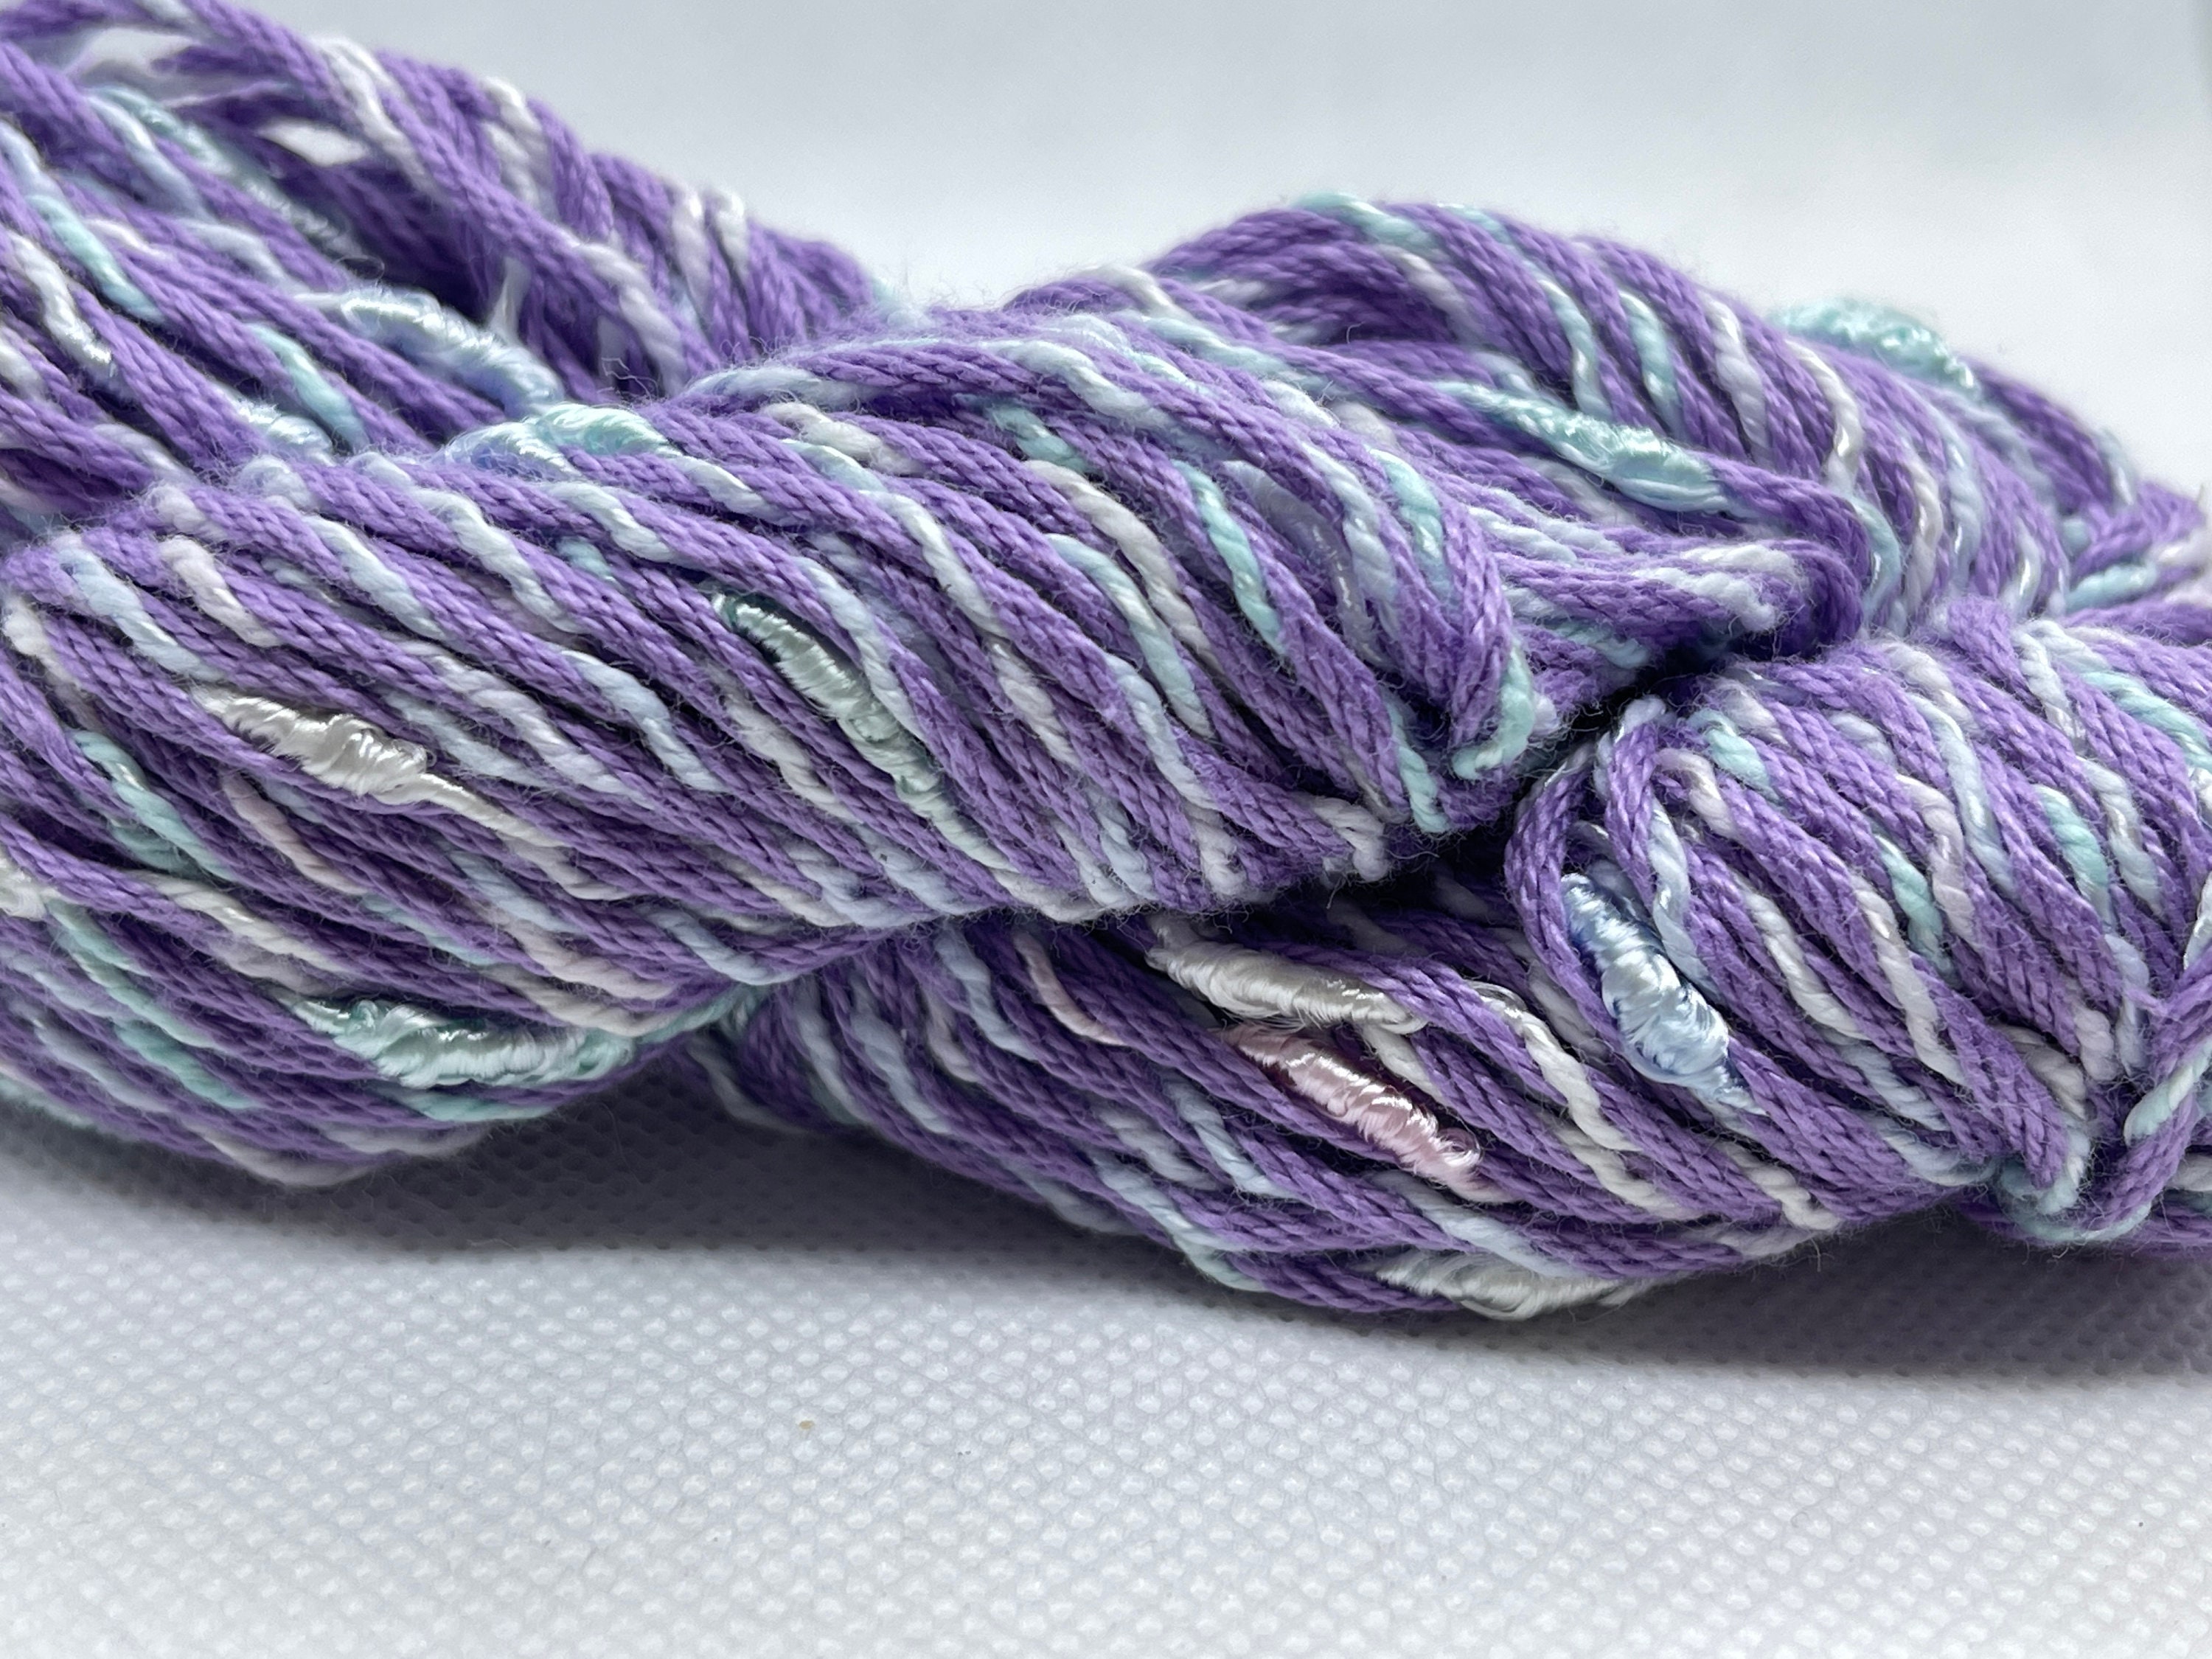 Purple Passion - Yough Slub - Hand Dyed Yarn - Hand Painted